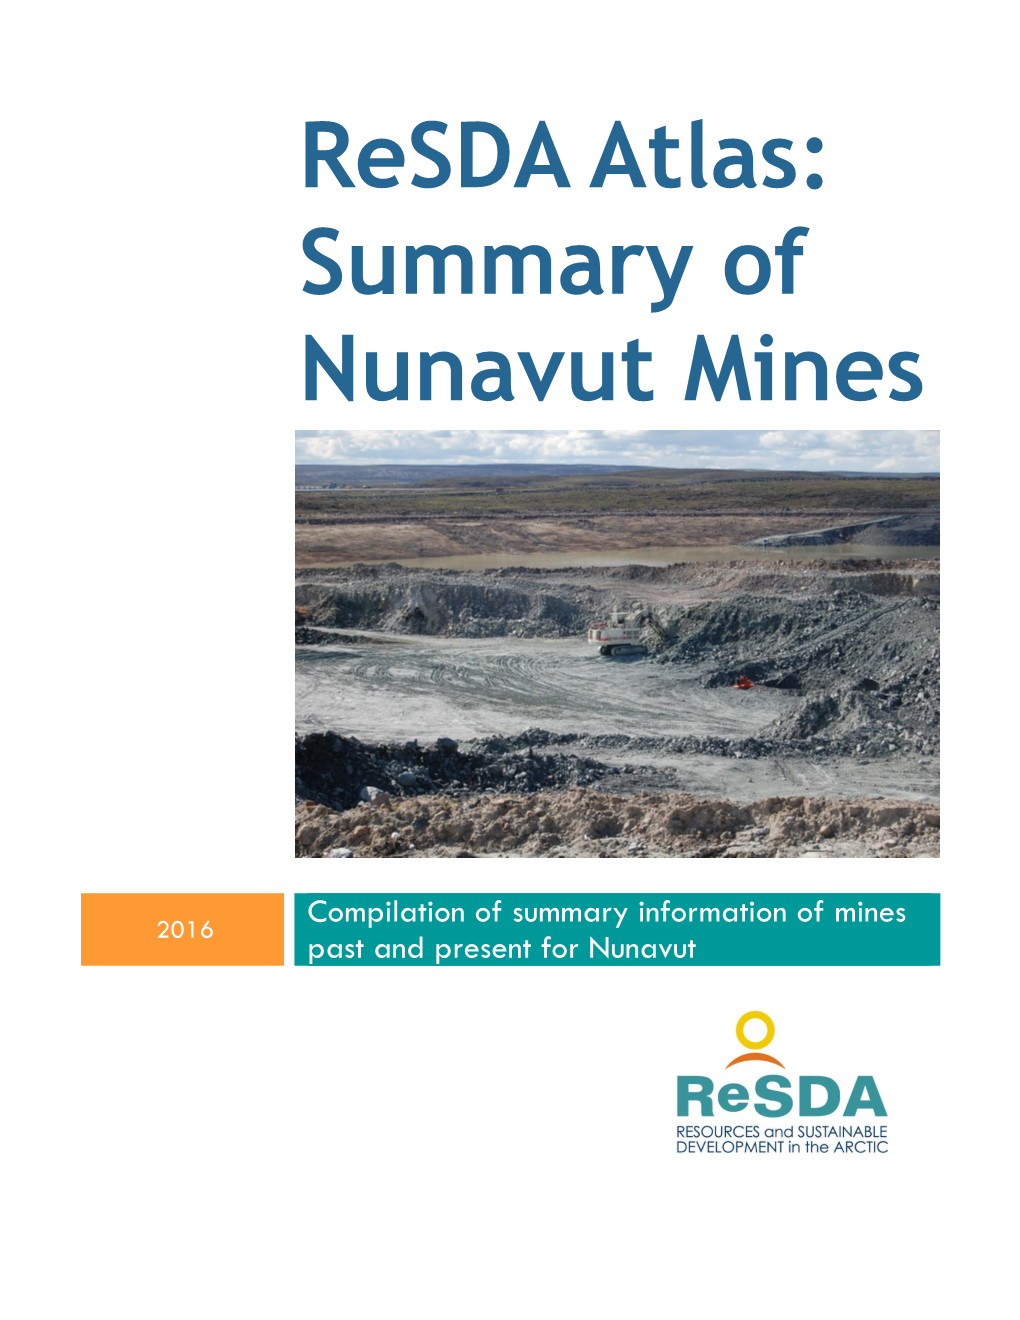 Summary of Nunavut Mines